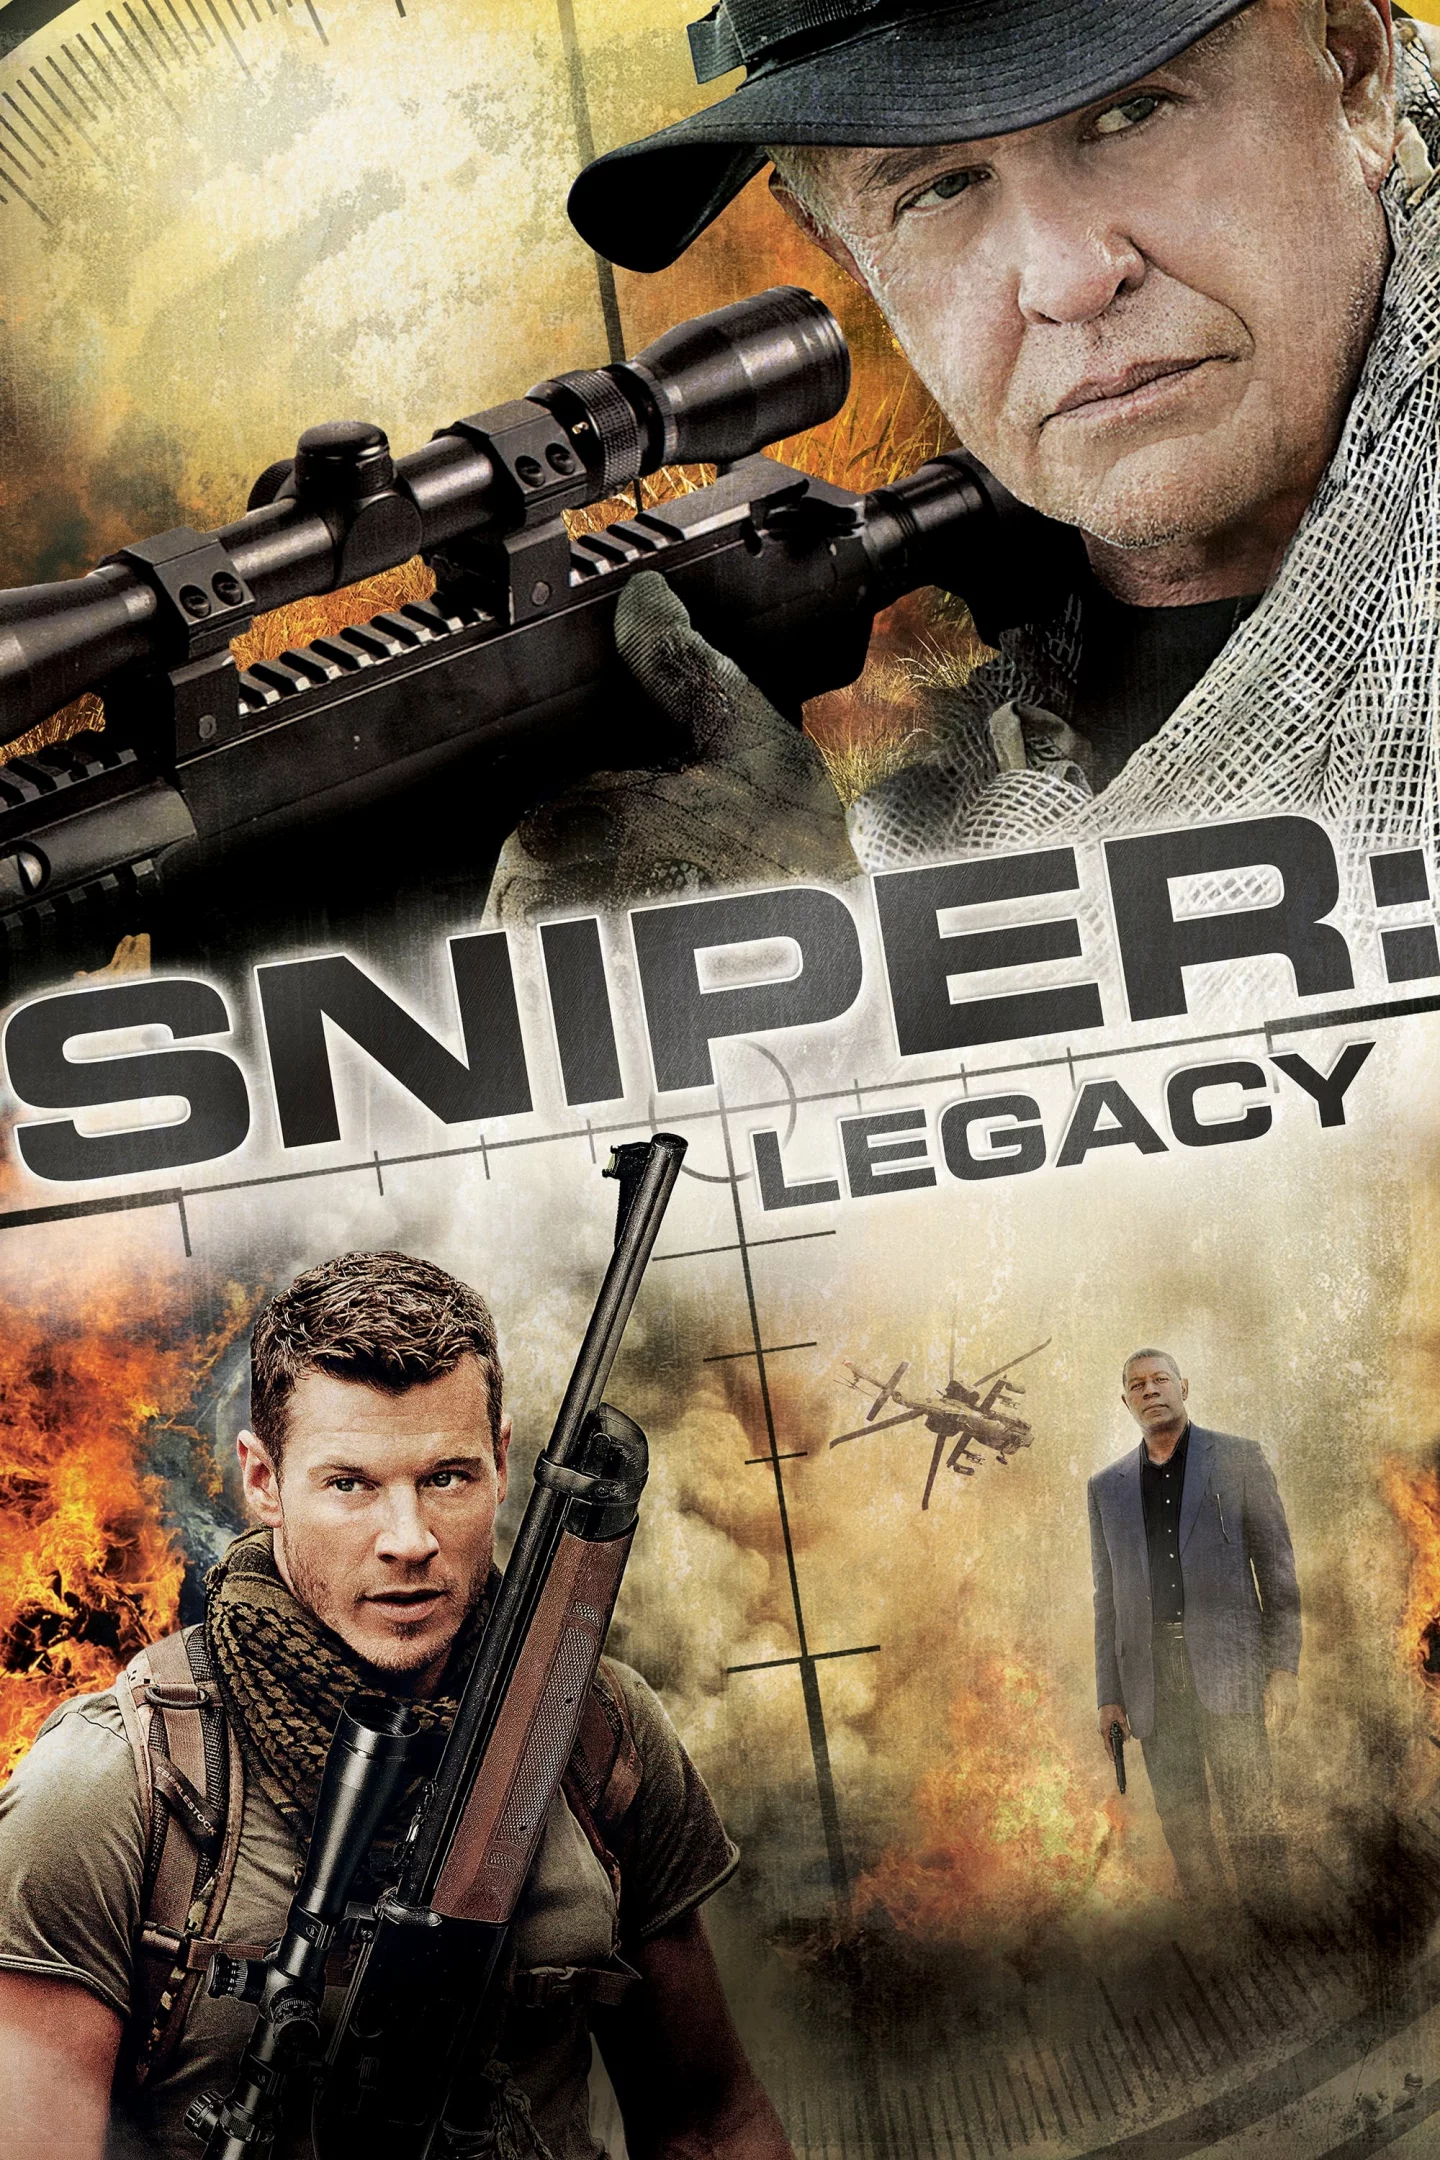 Photo du film : Sniper 5 : L'Héritage